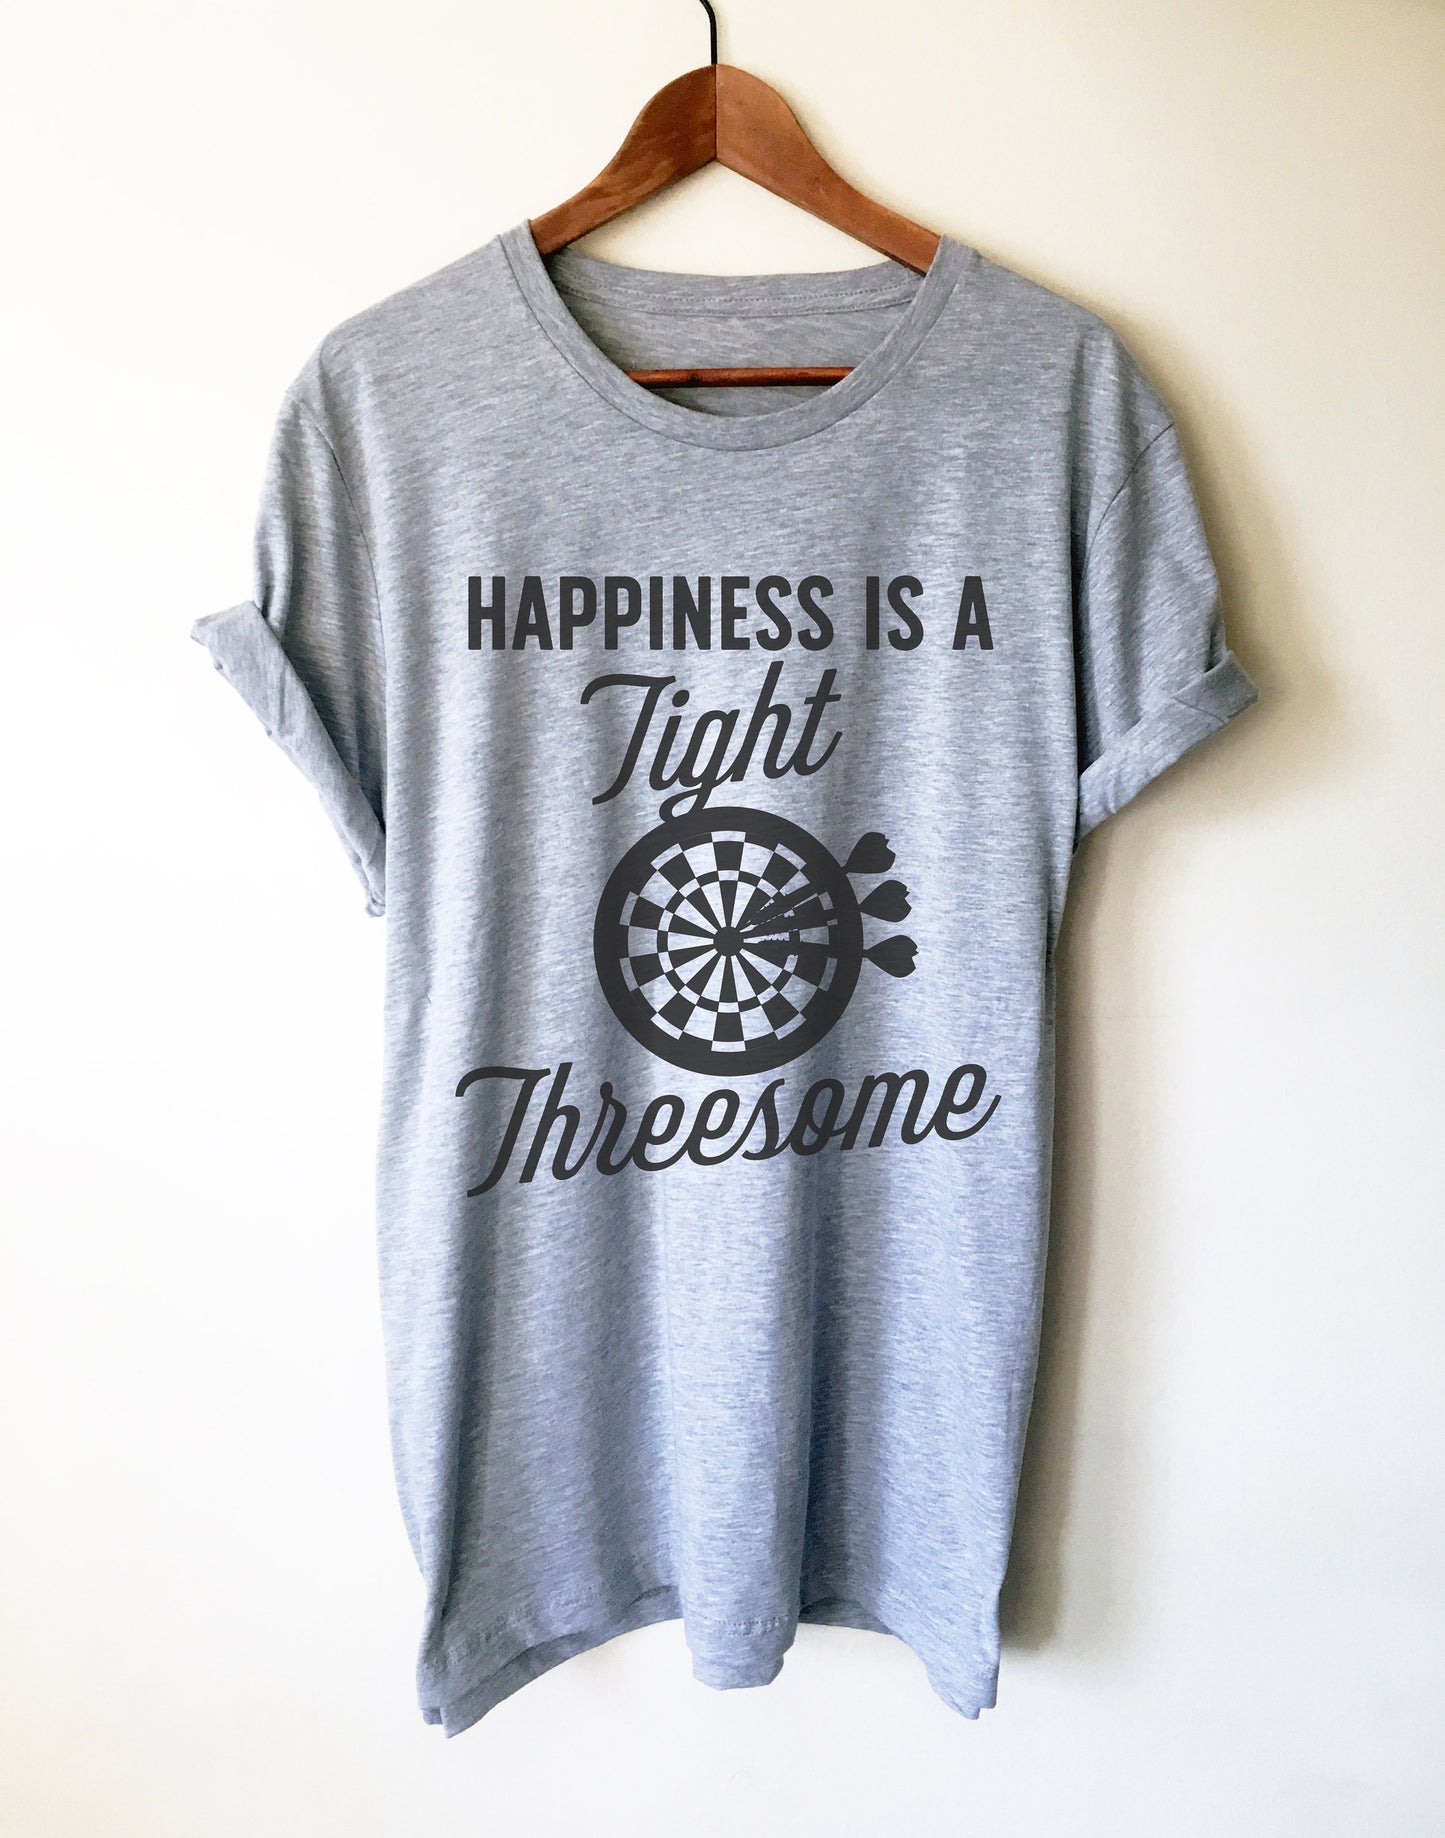 Happiness Is A Tight Threesome Unisex Shirt - Darts Shirt, Dart Shirt, Darts, Sports Shirt, Championship Shirt, Team Tshirts, Bullseye Shirt